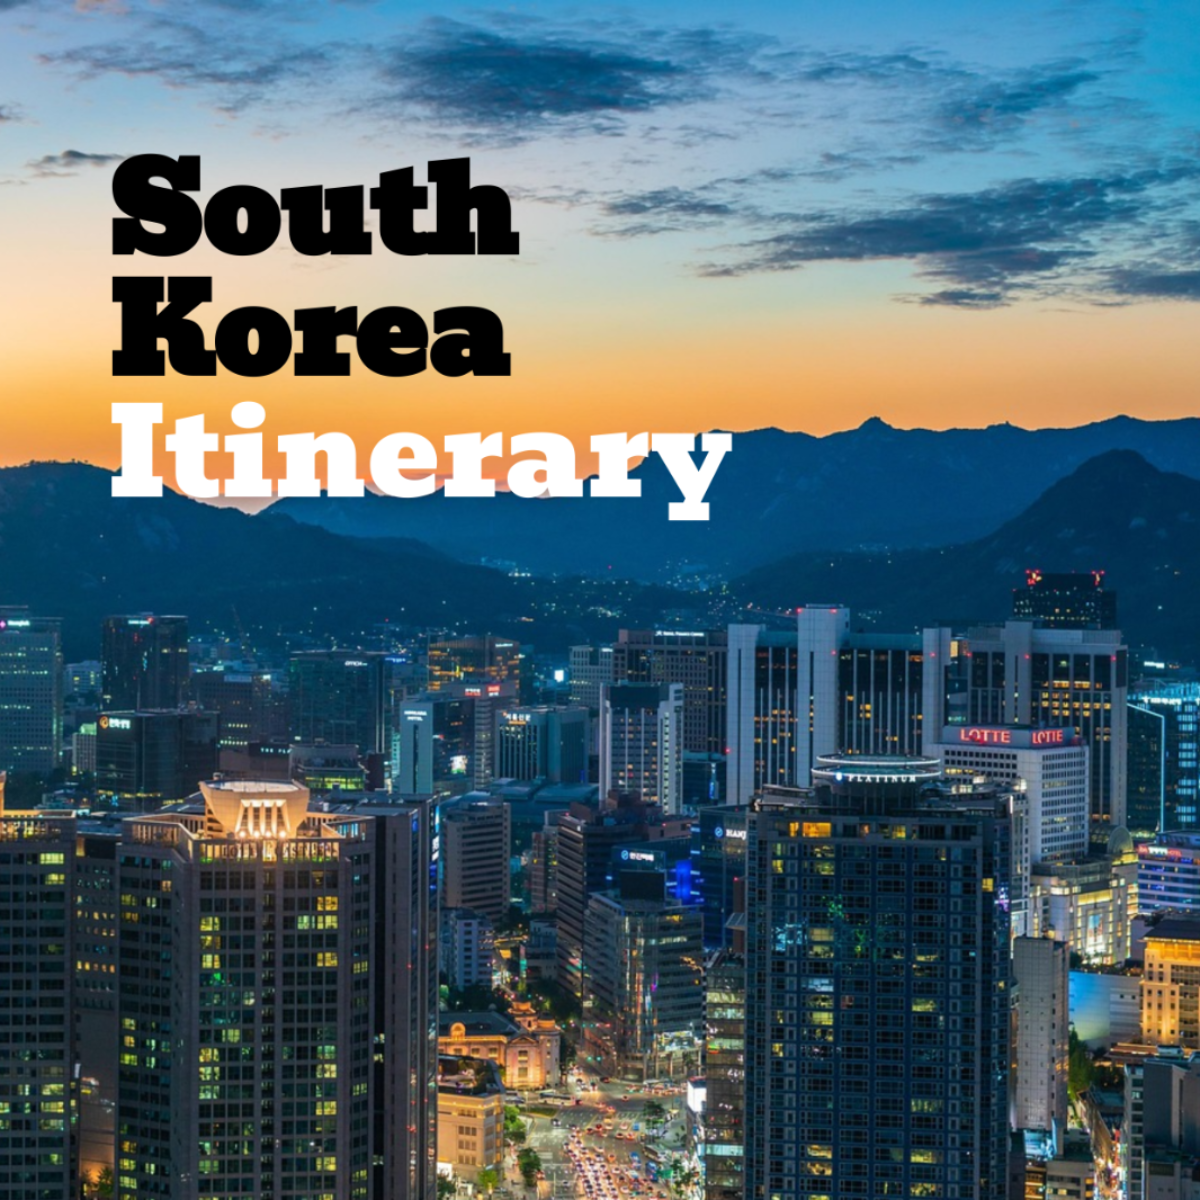 South Korea Itinerary Template